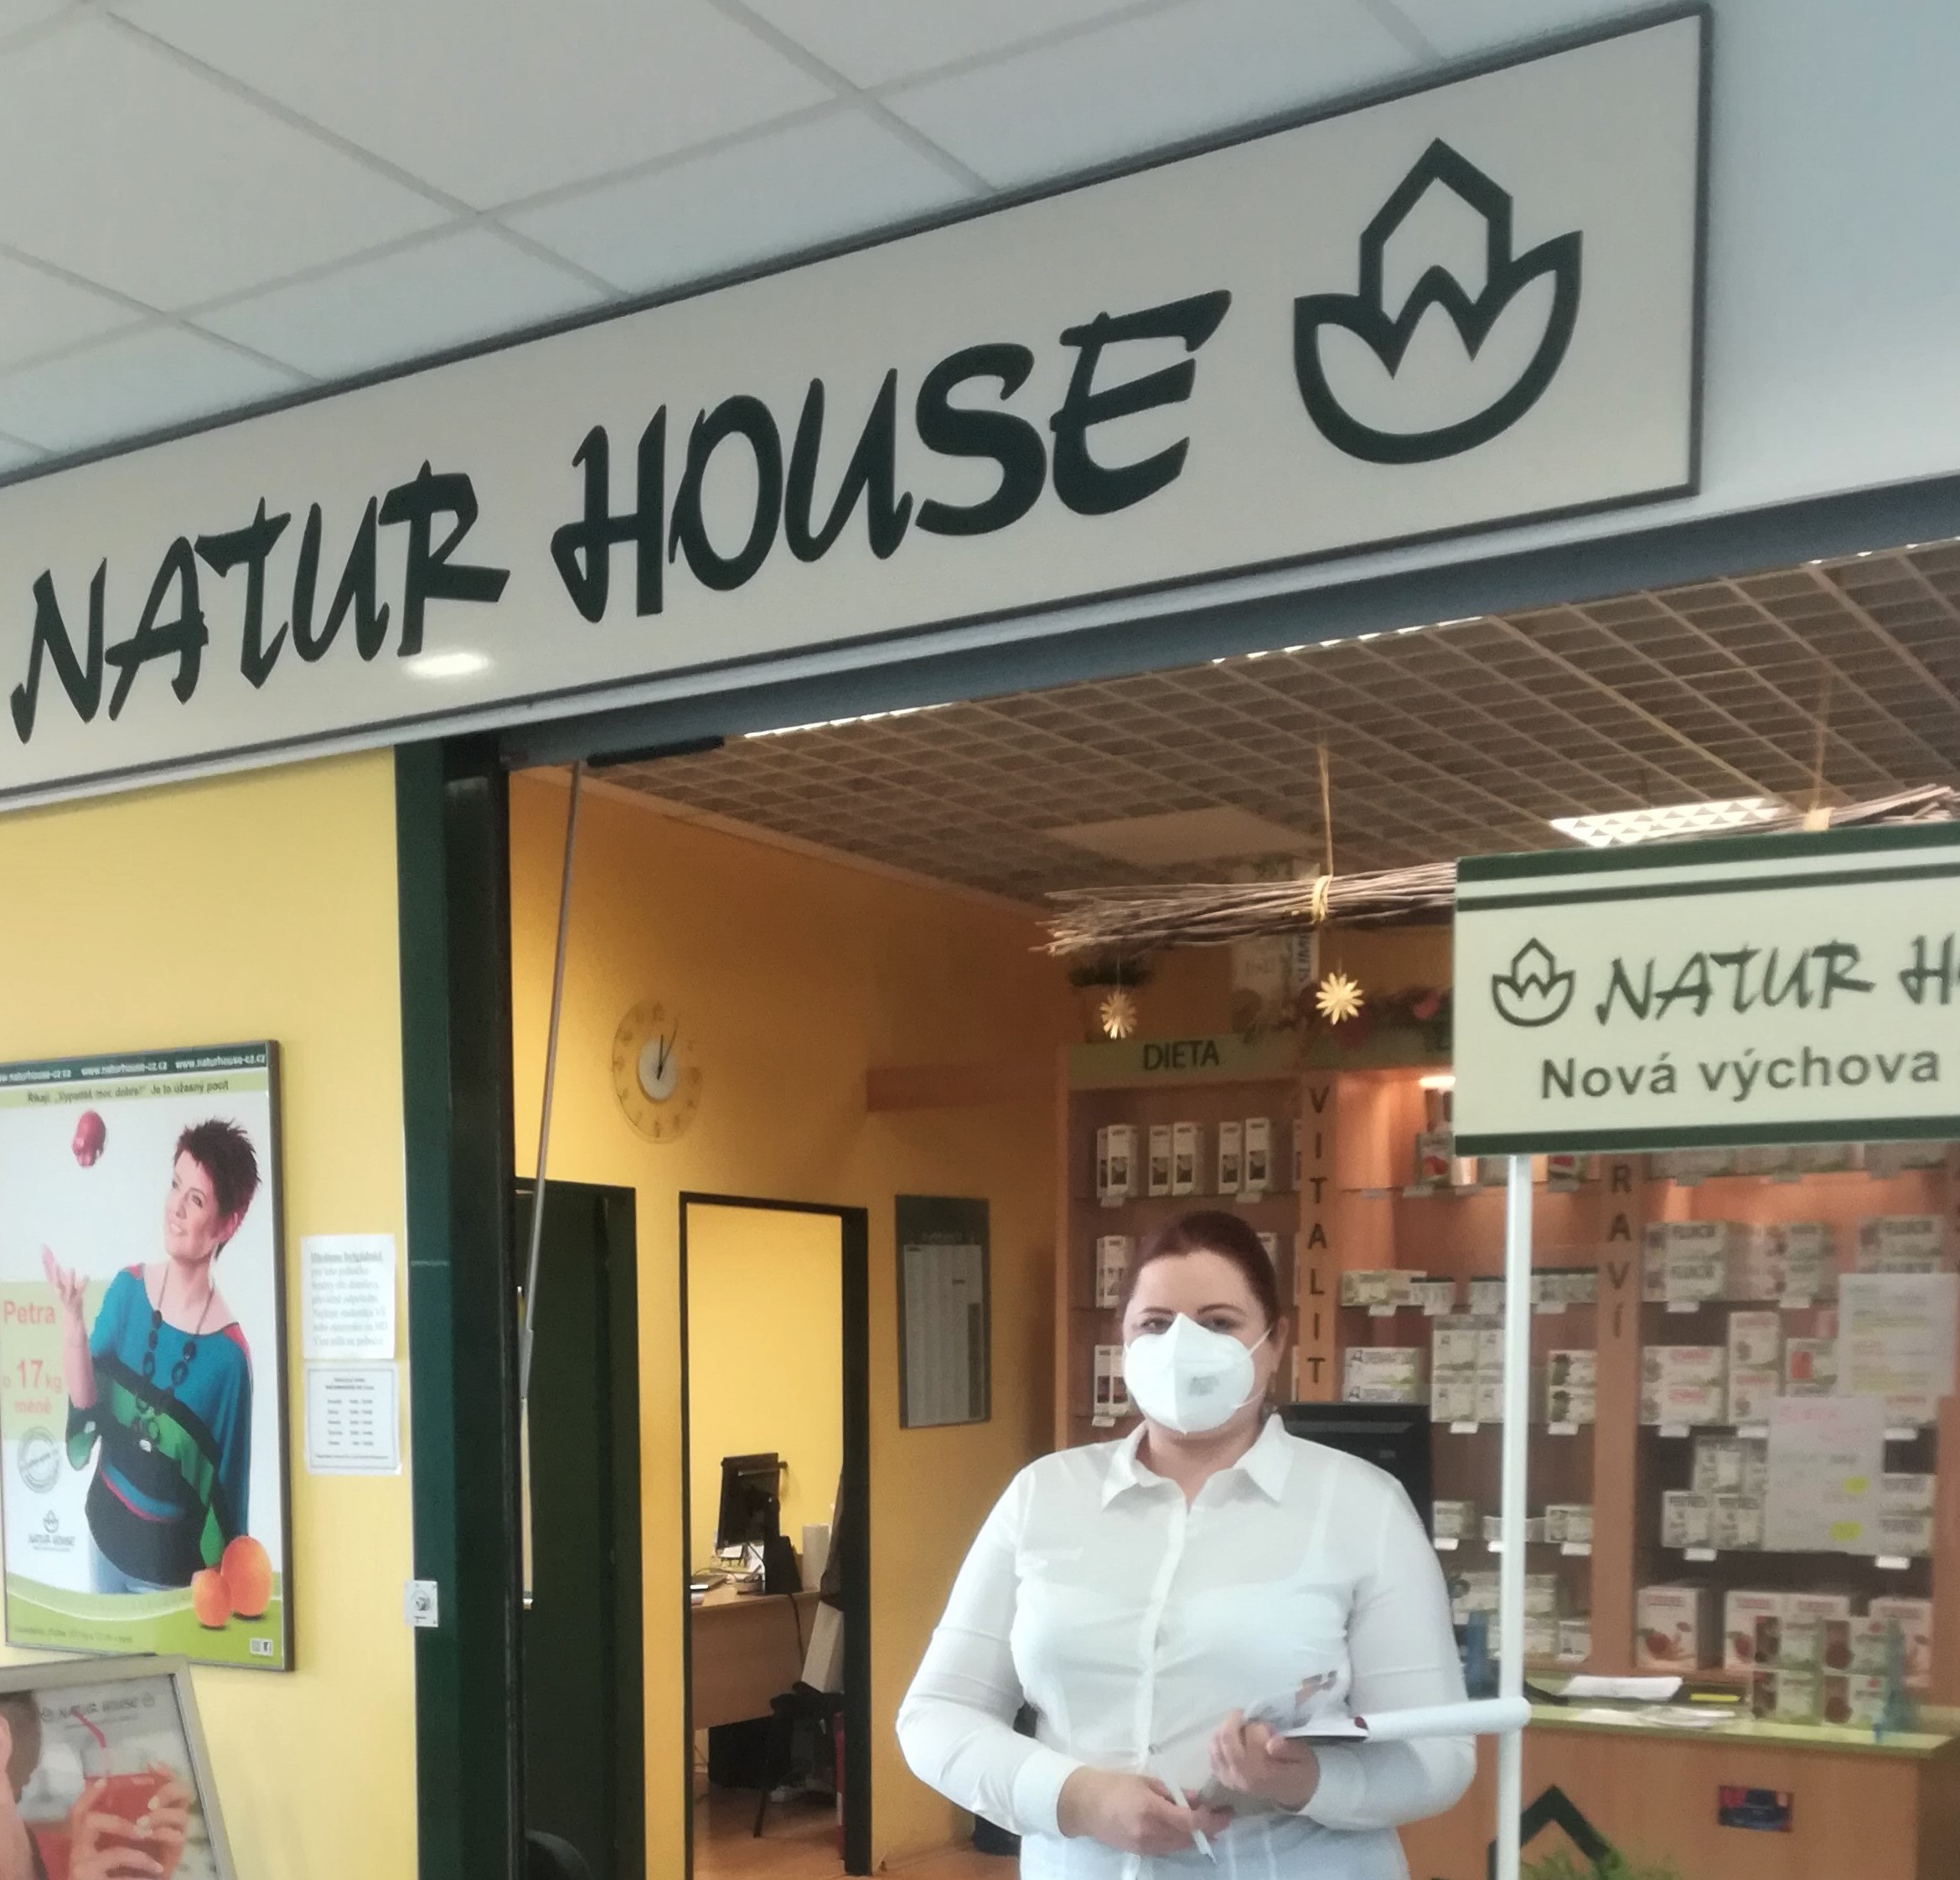 Zaistili sme hostesky pre REDUCCIA s.r.o. - NaturHouse,Naturhouse (OC LASO) - Ostrava